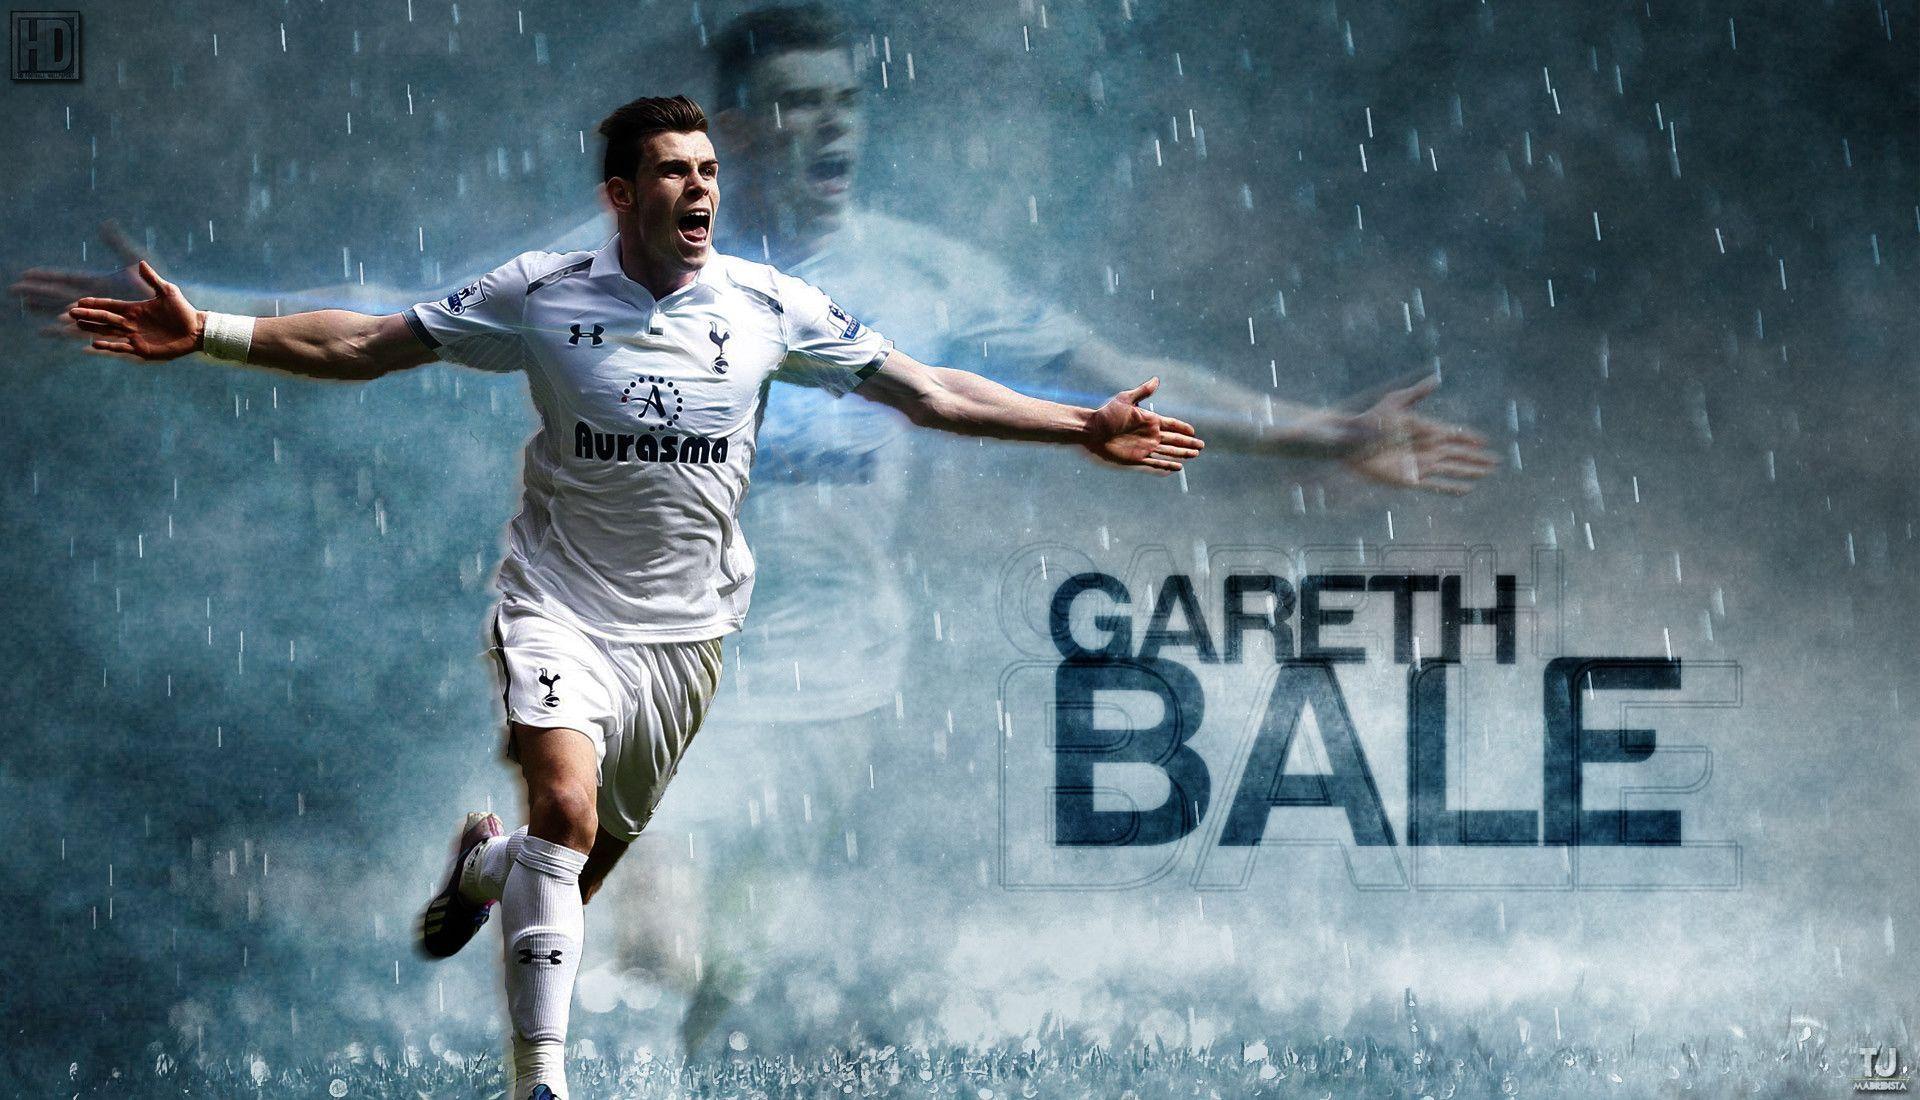 Gareth Bale Wallpaper, Gareth Bale Background for Desktop